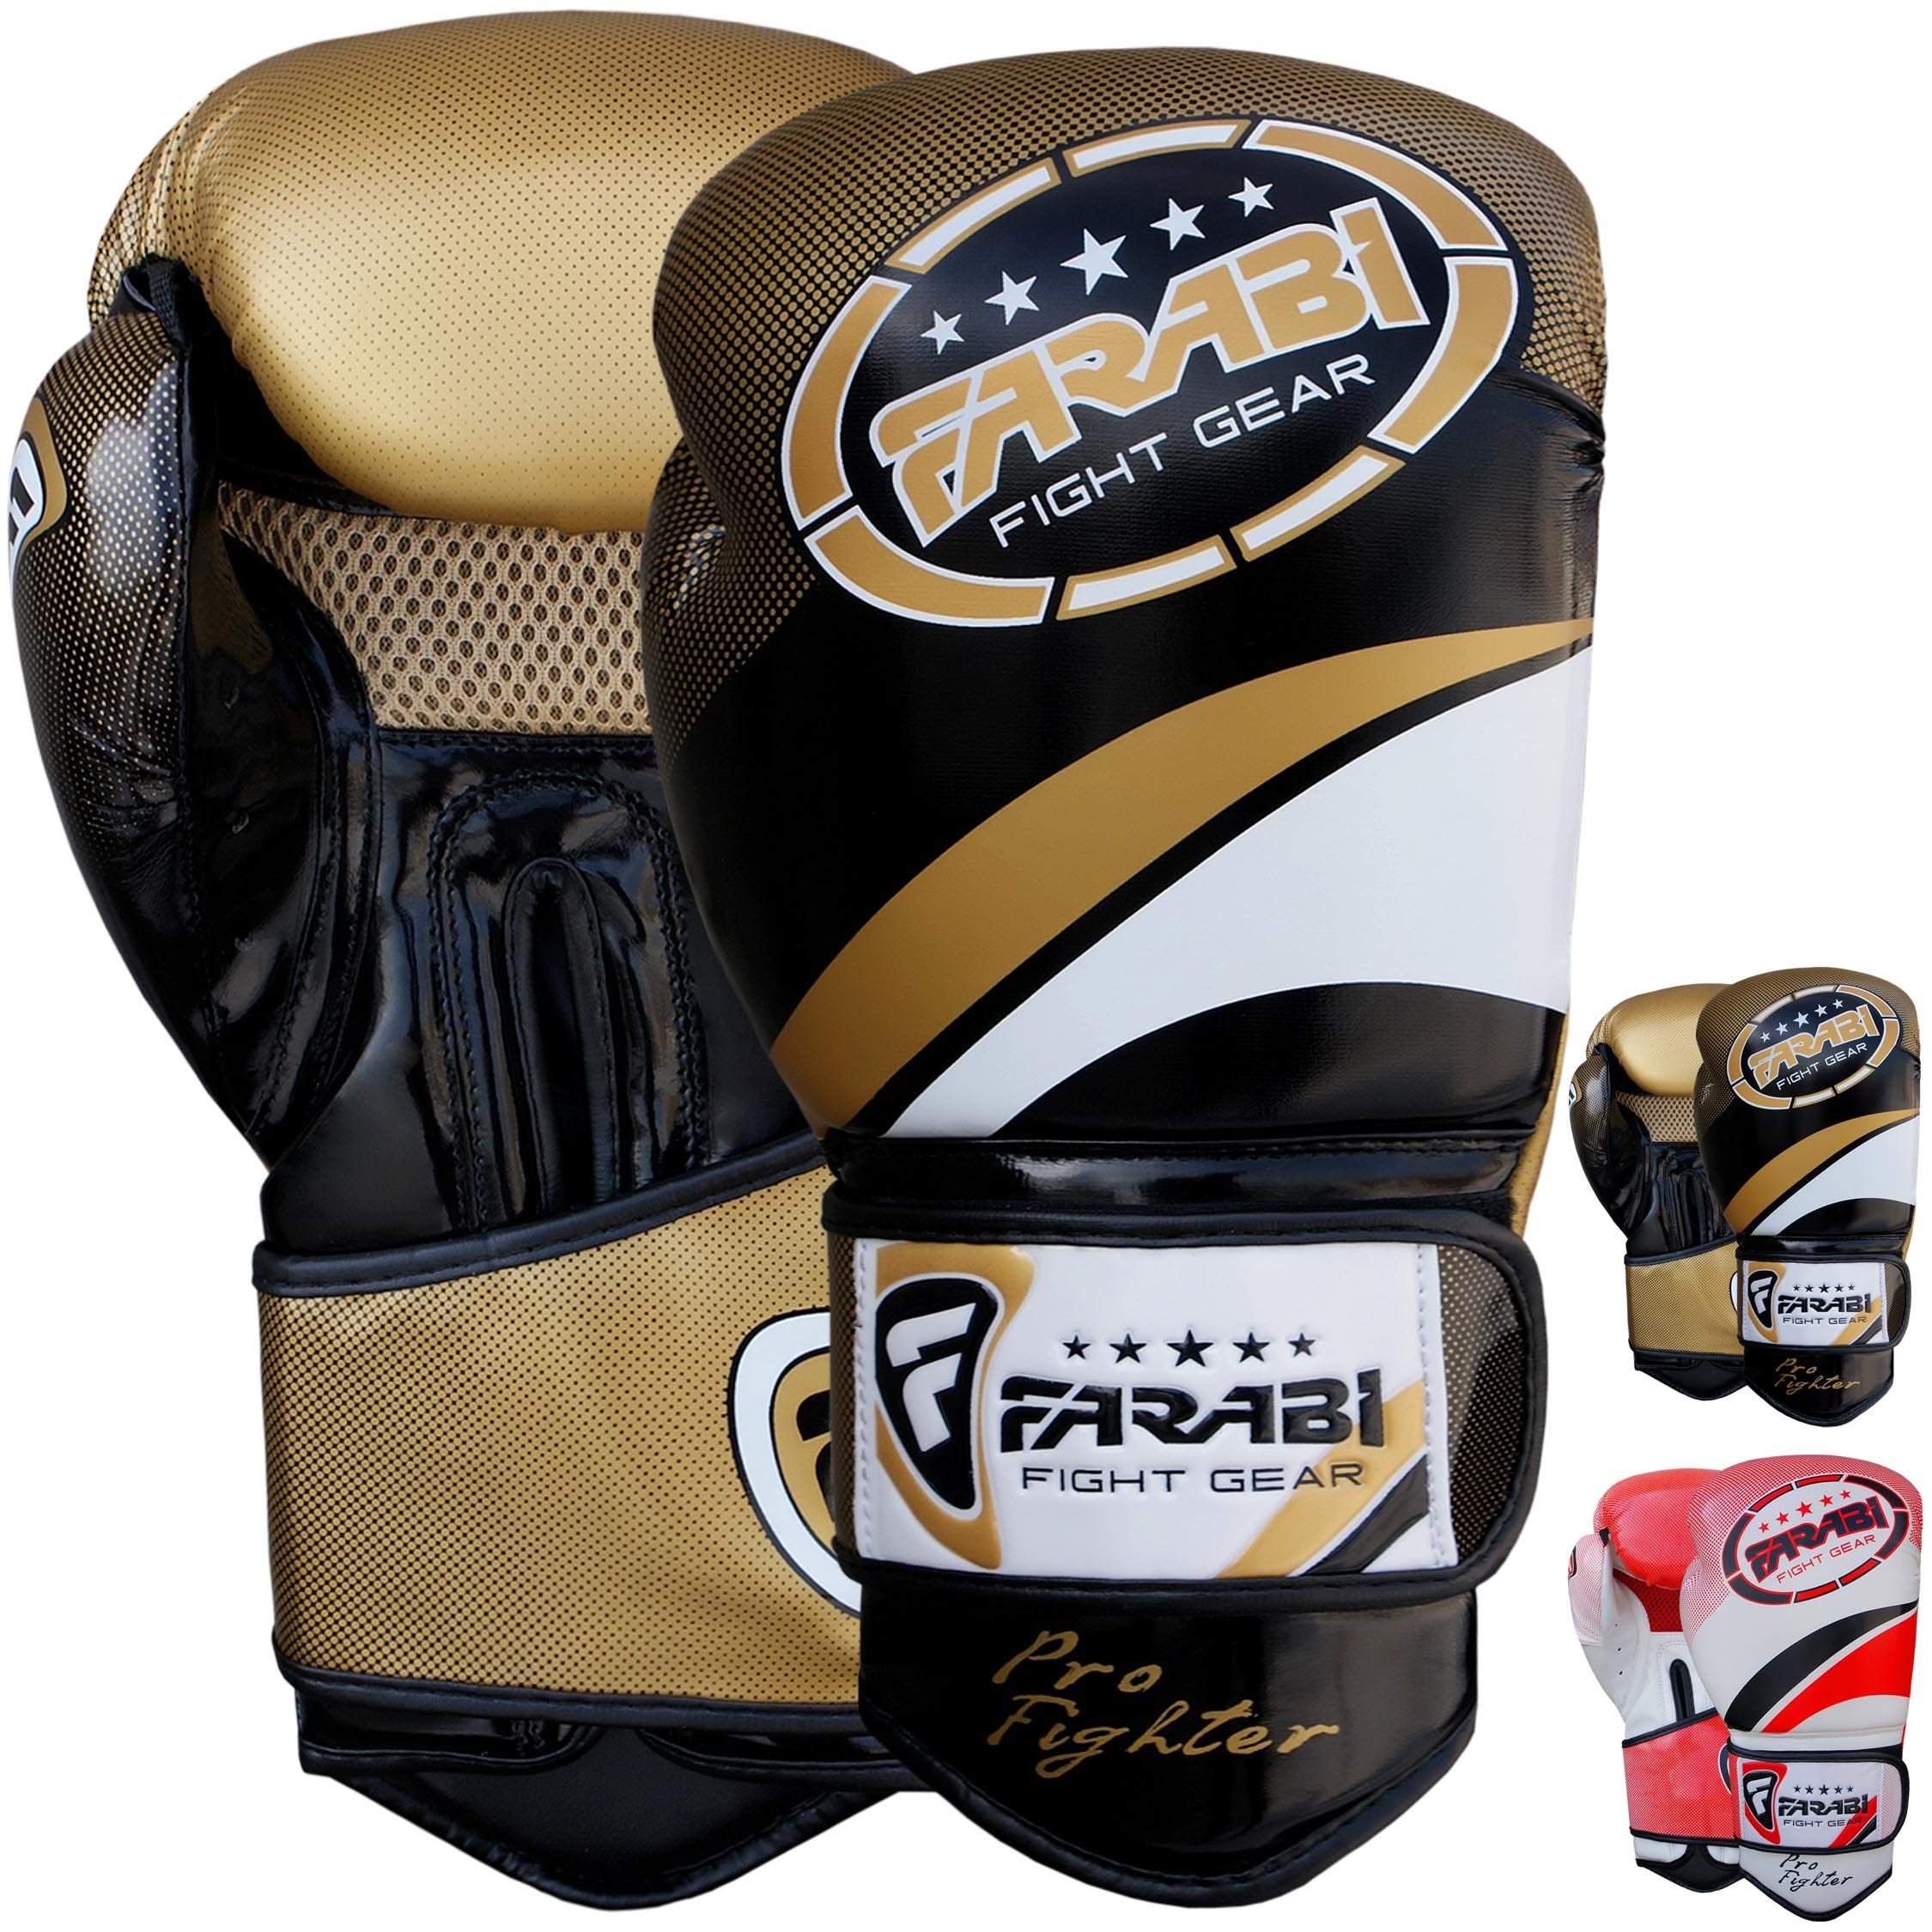 Farabi Boxing Gloves for Training Punching Sparring (Black/Gold, 16-oz)